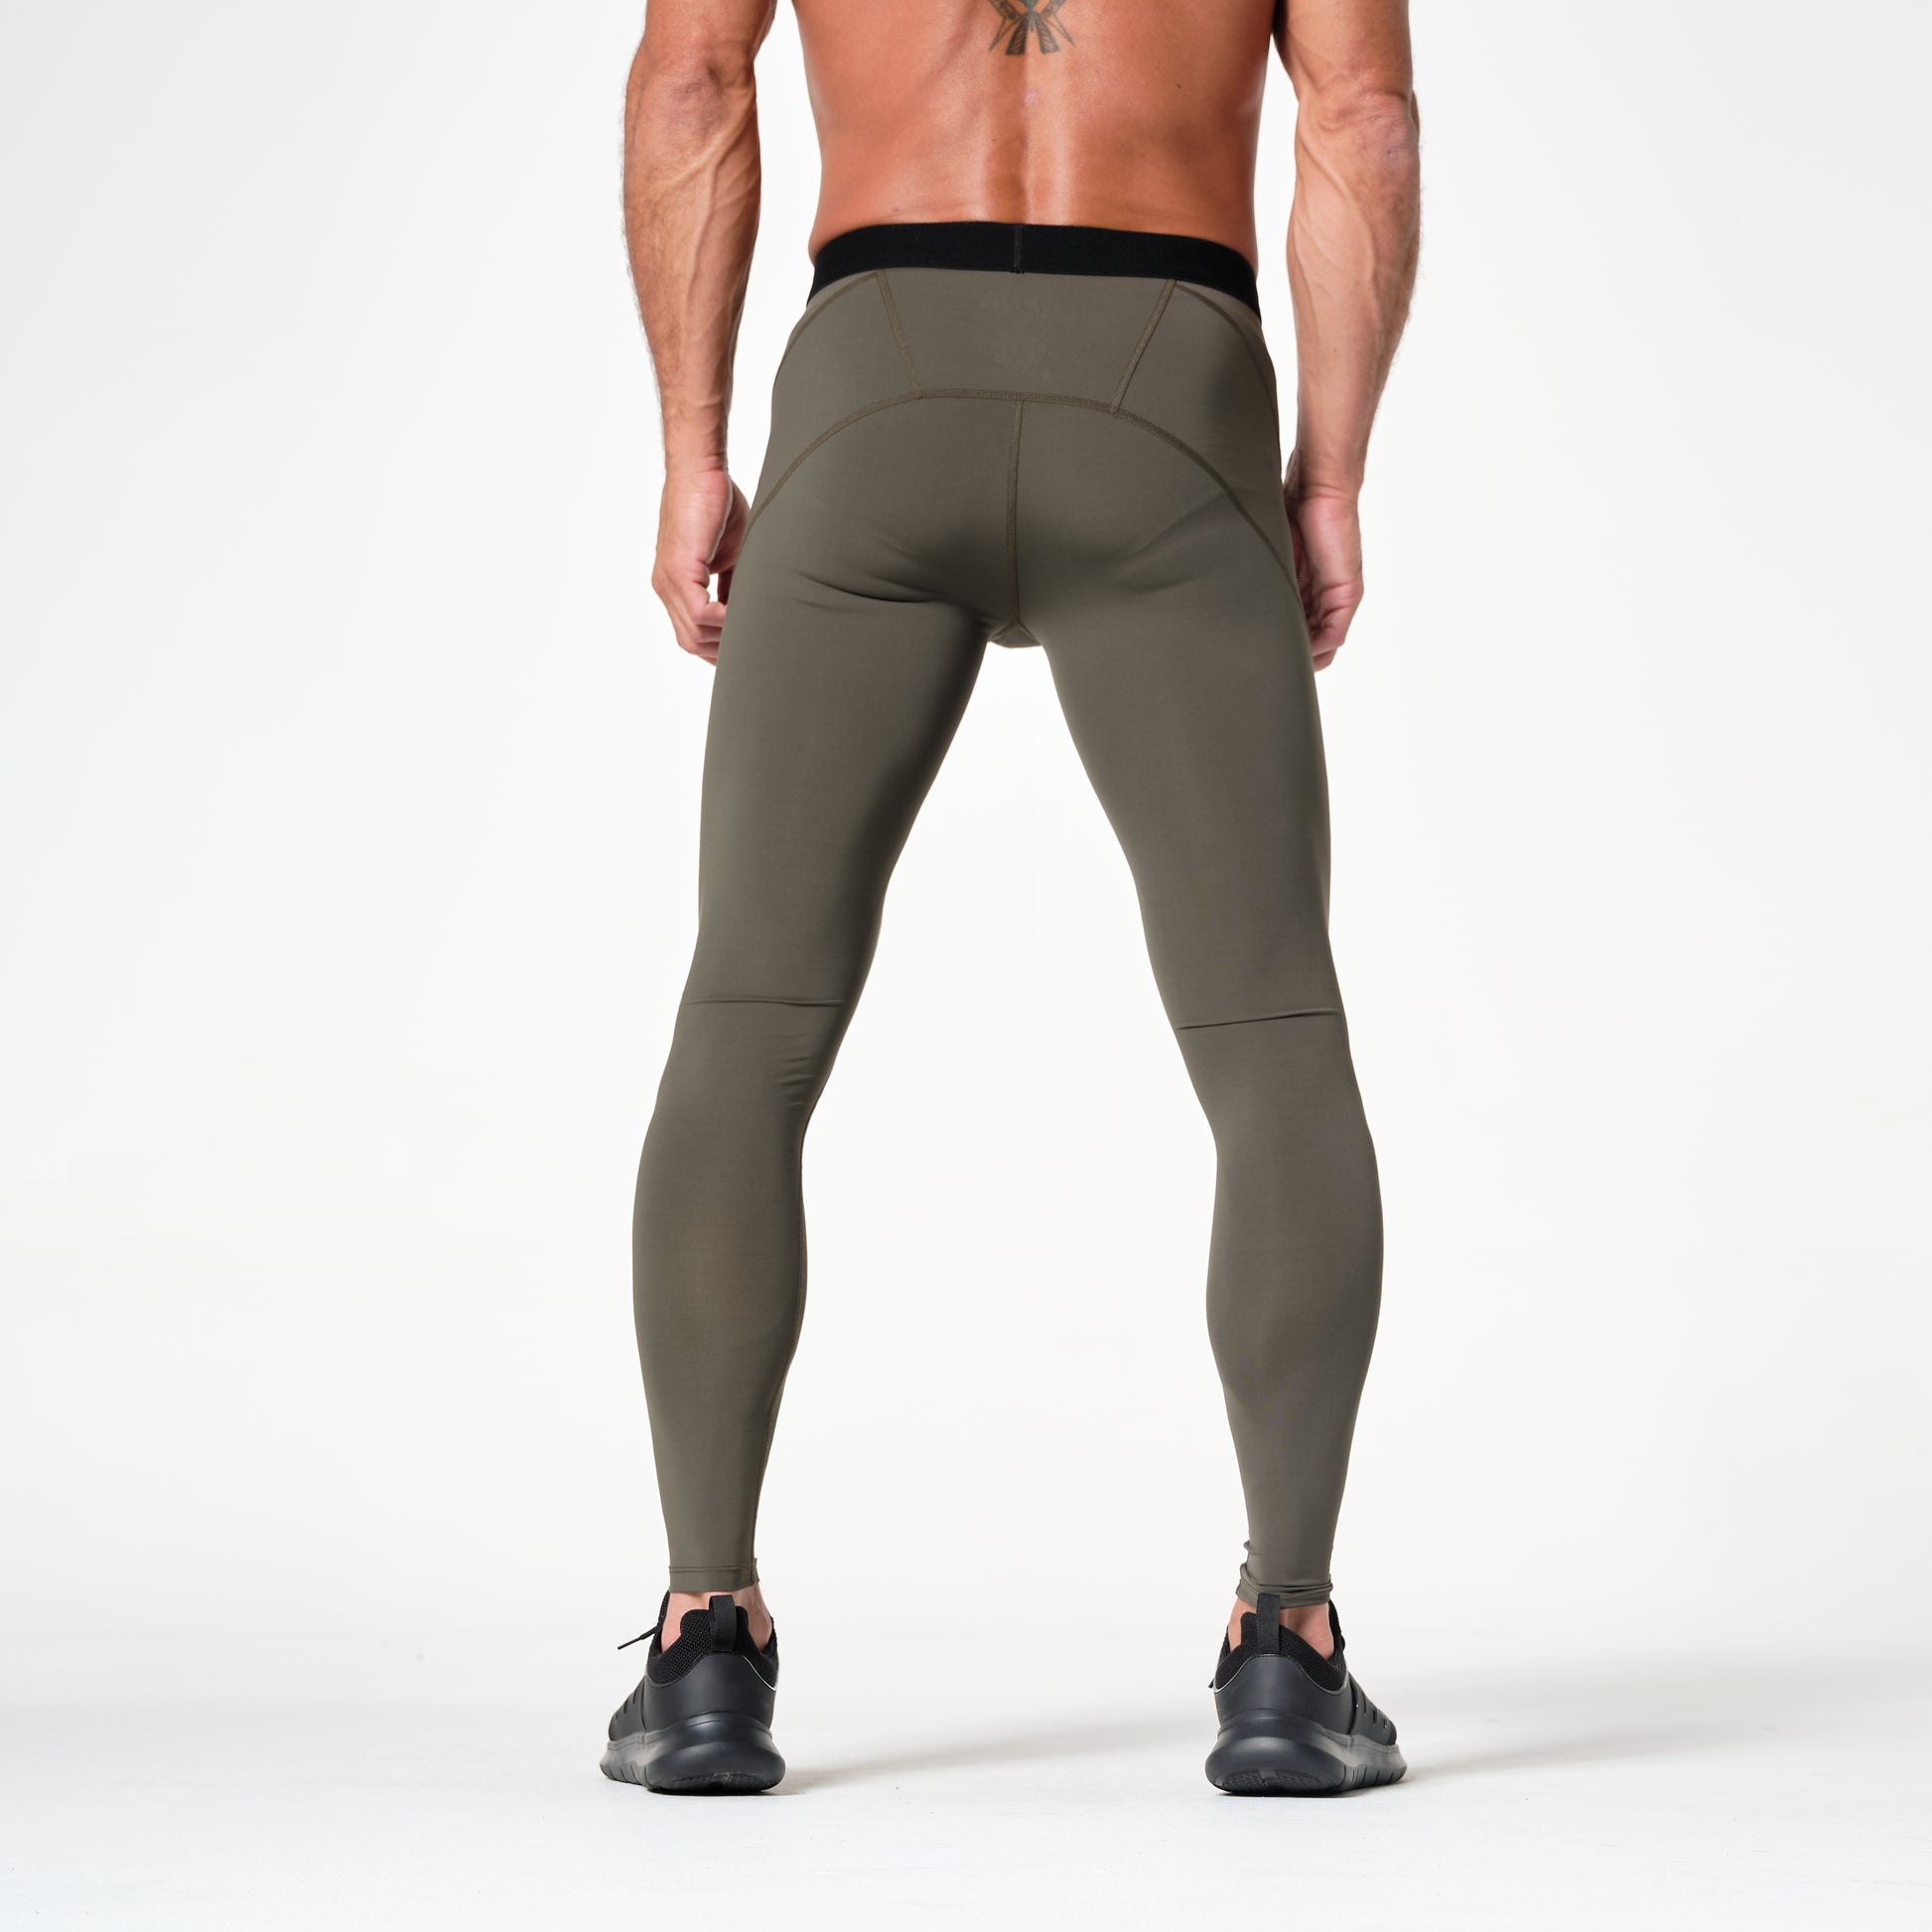 Nylon Compression Tshirt Full Sleeve Tights For Men (Green)